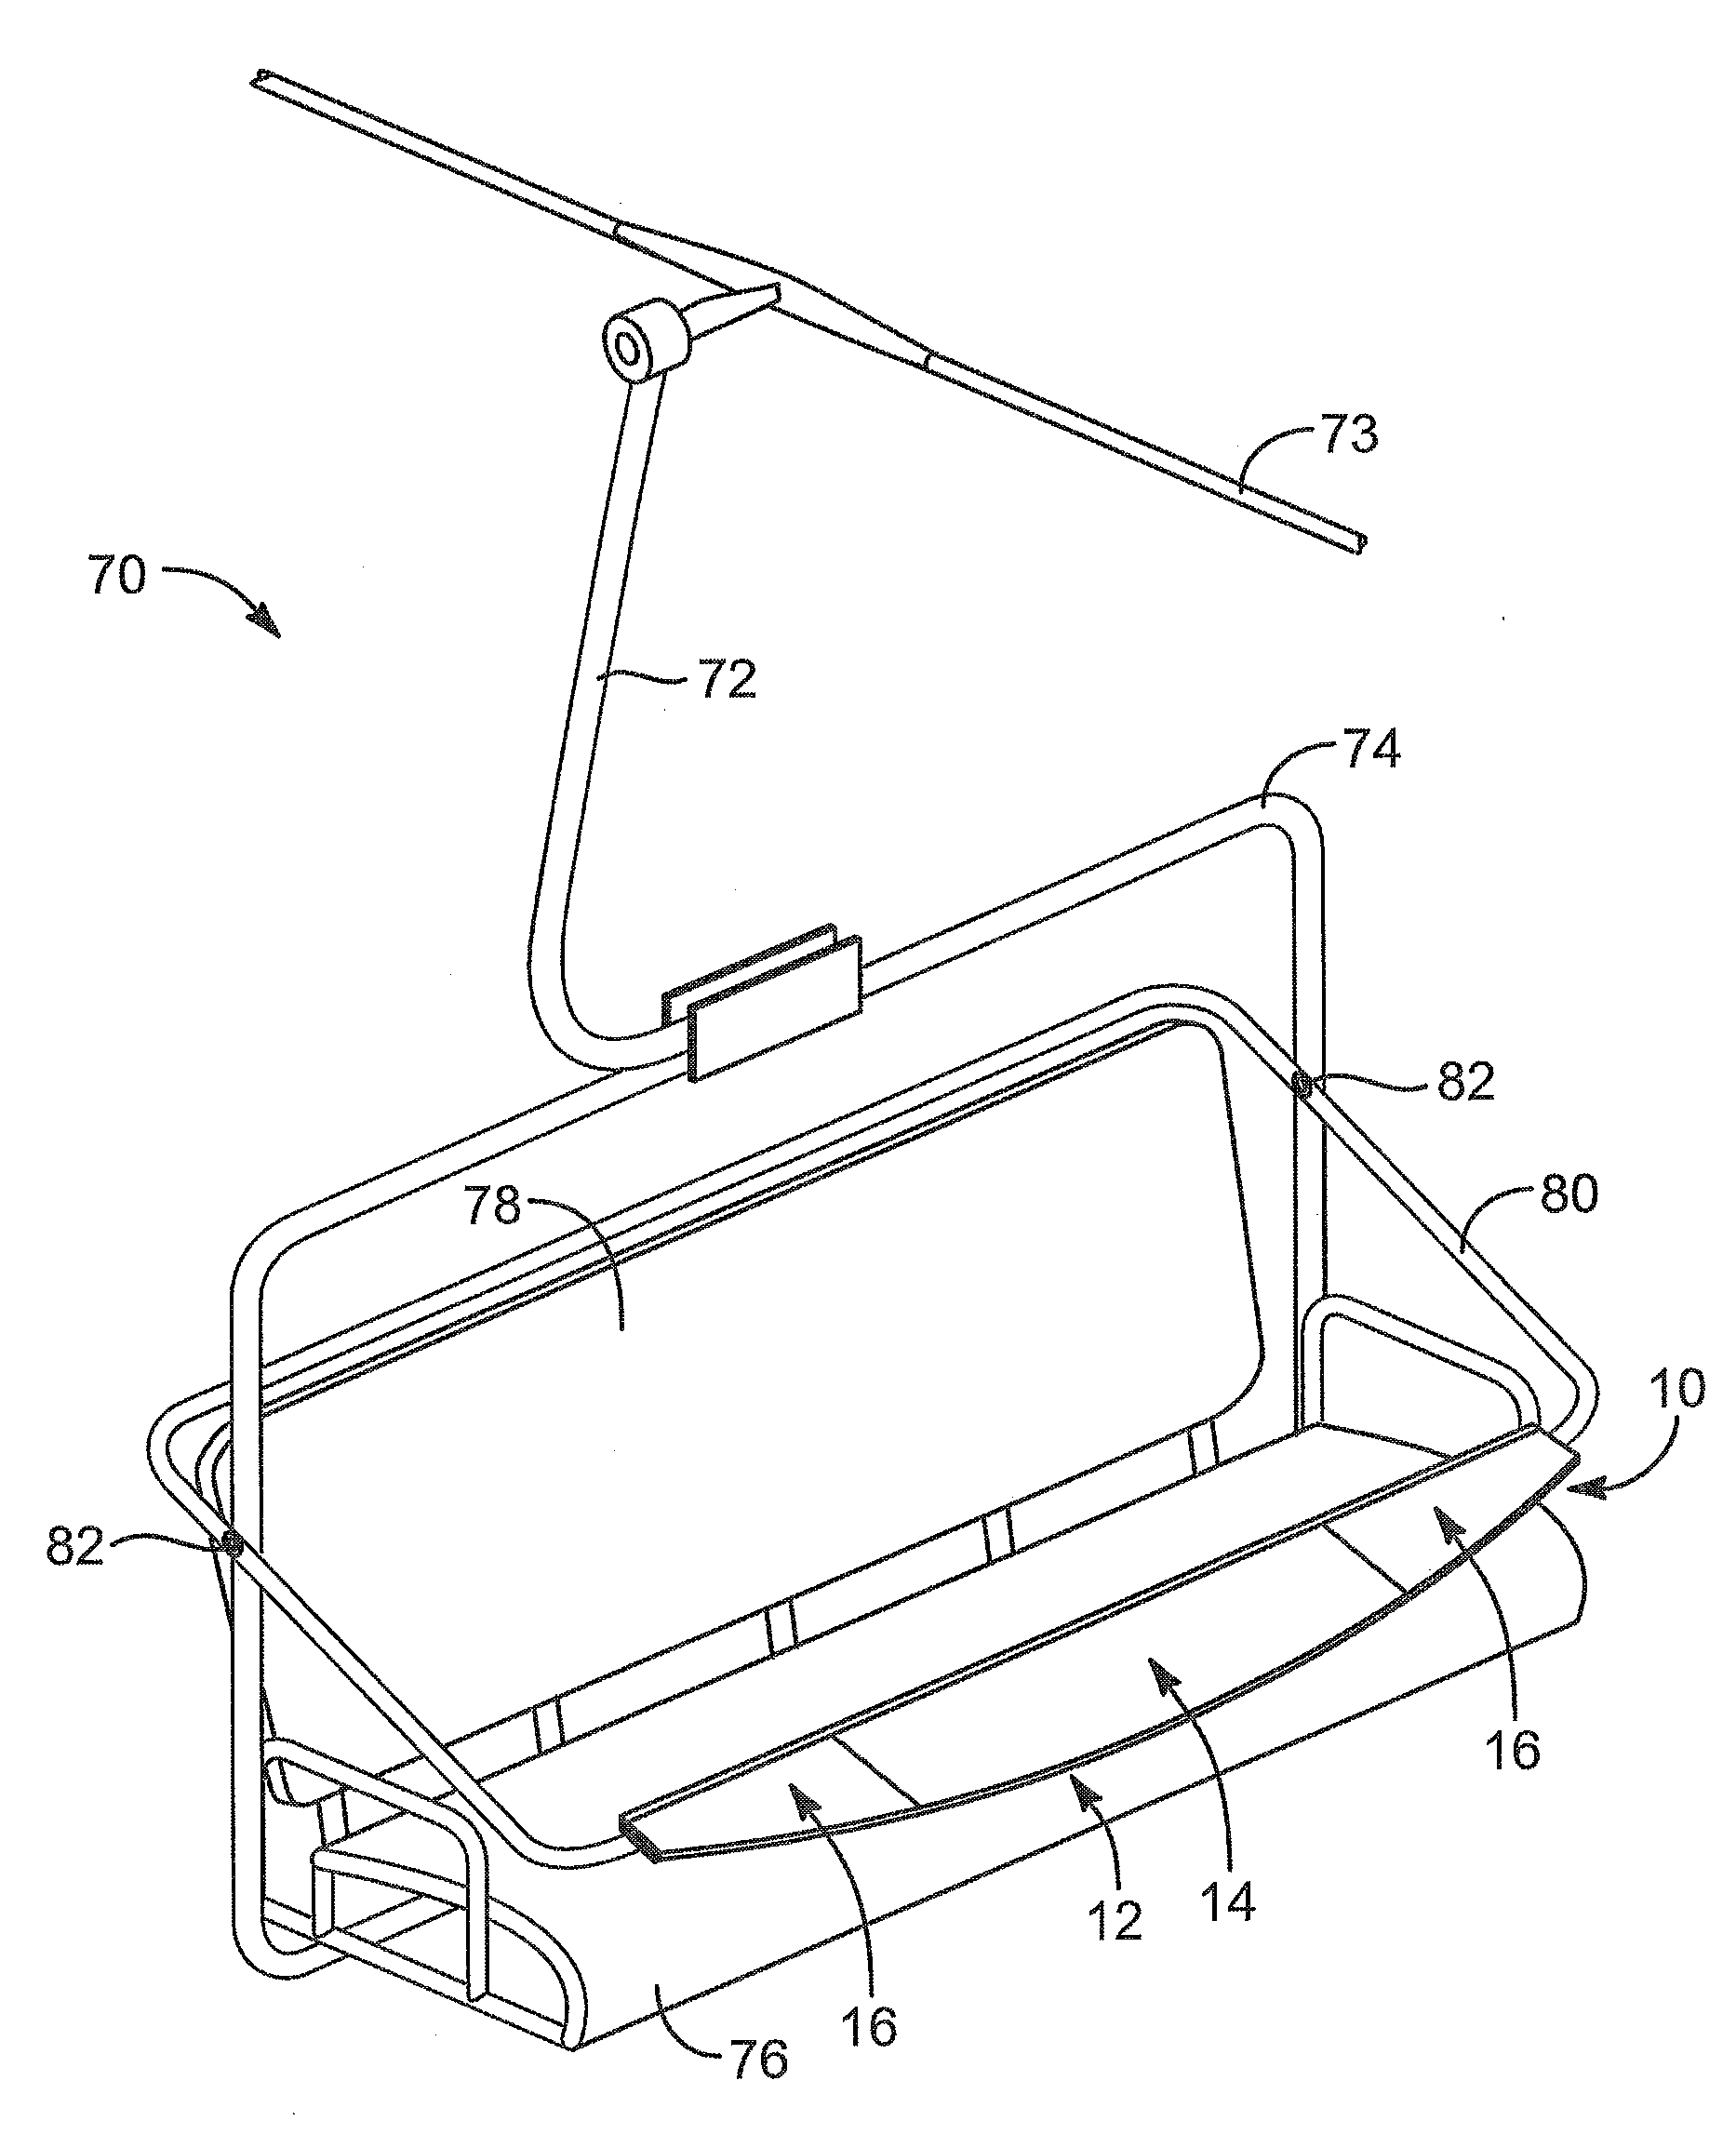 Ski-chair-lift display apparatus and method